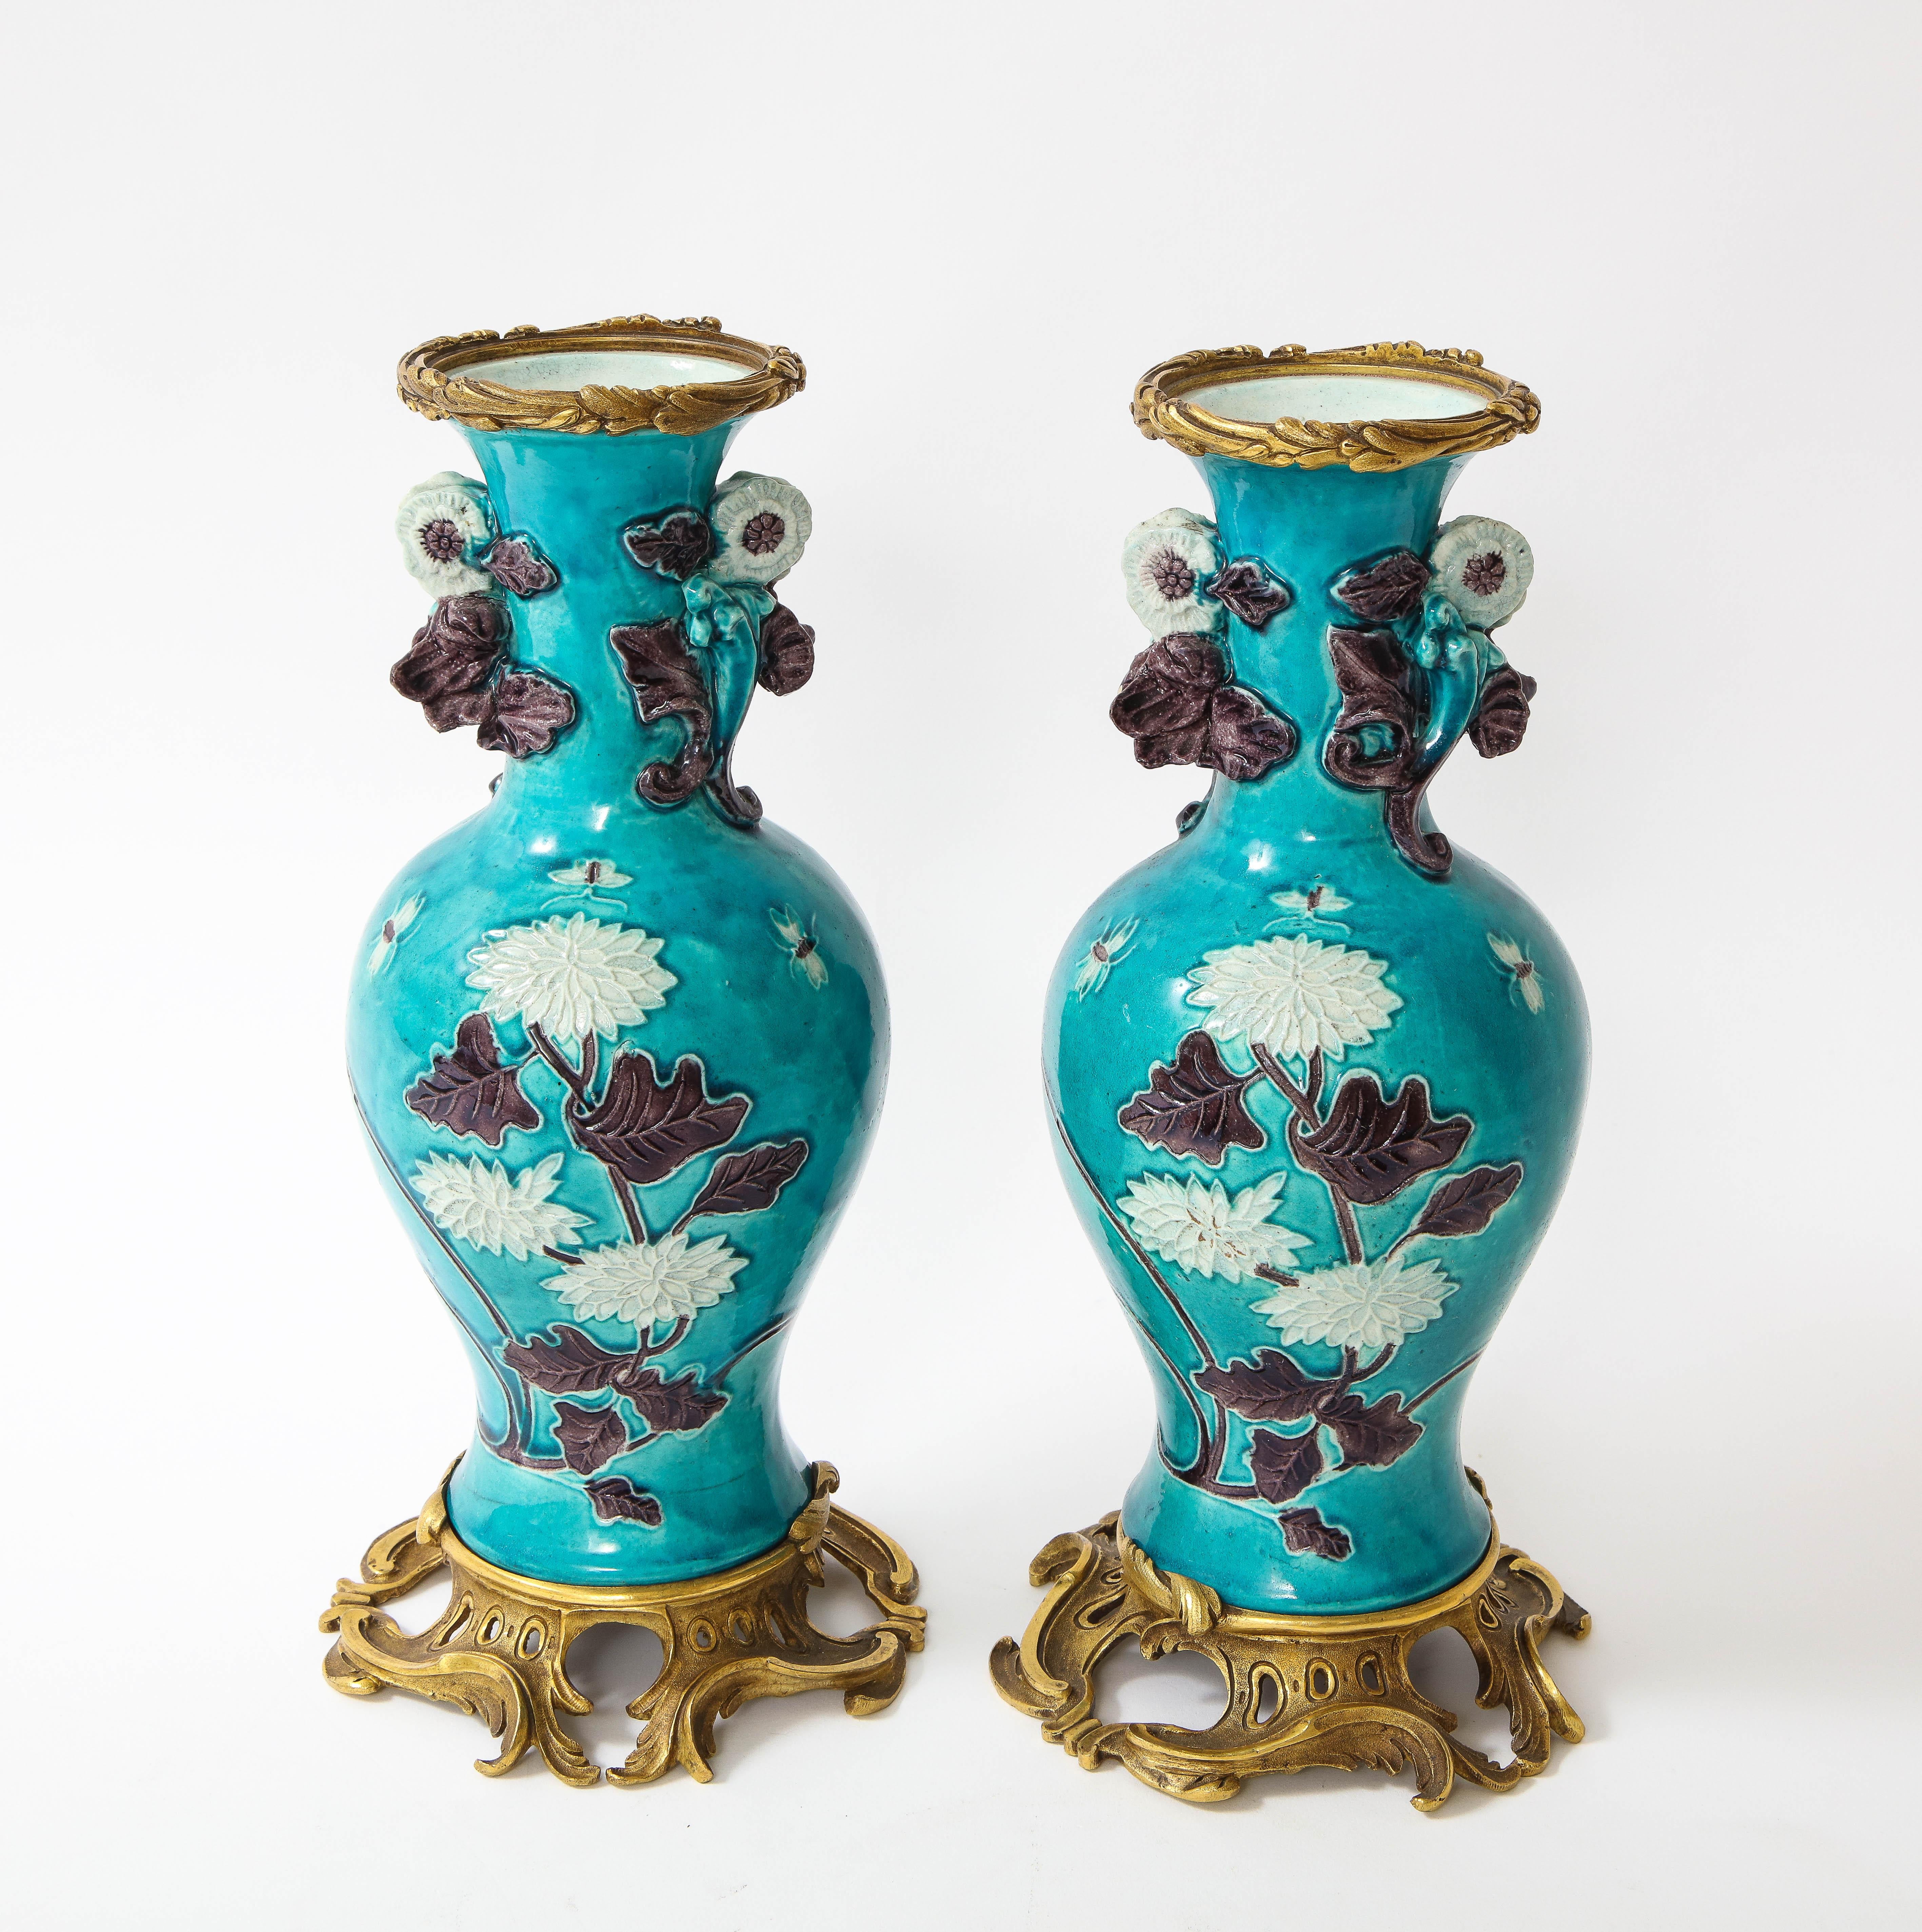 18th century vase